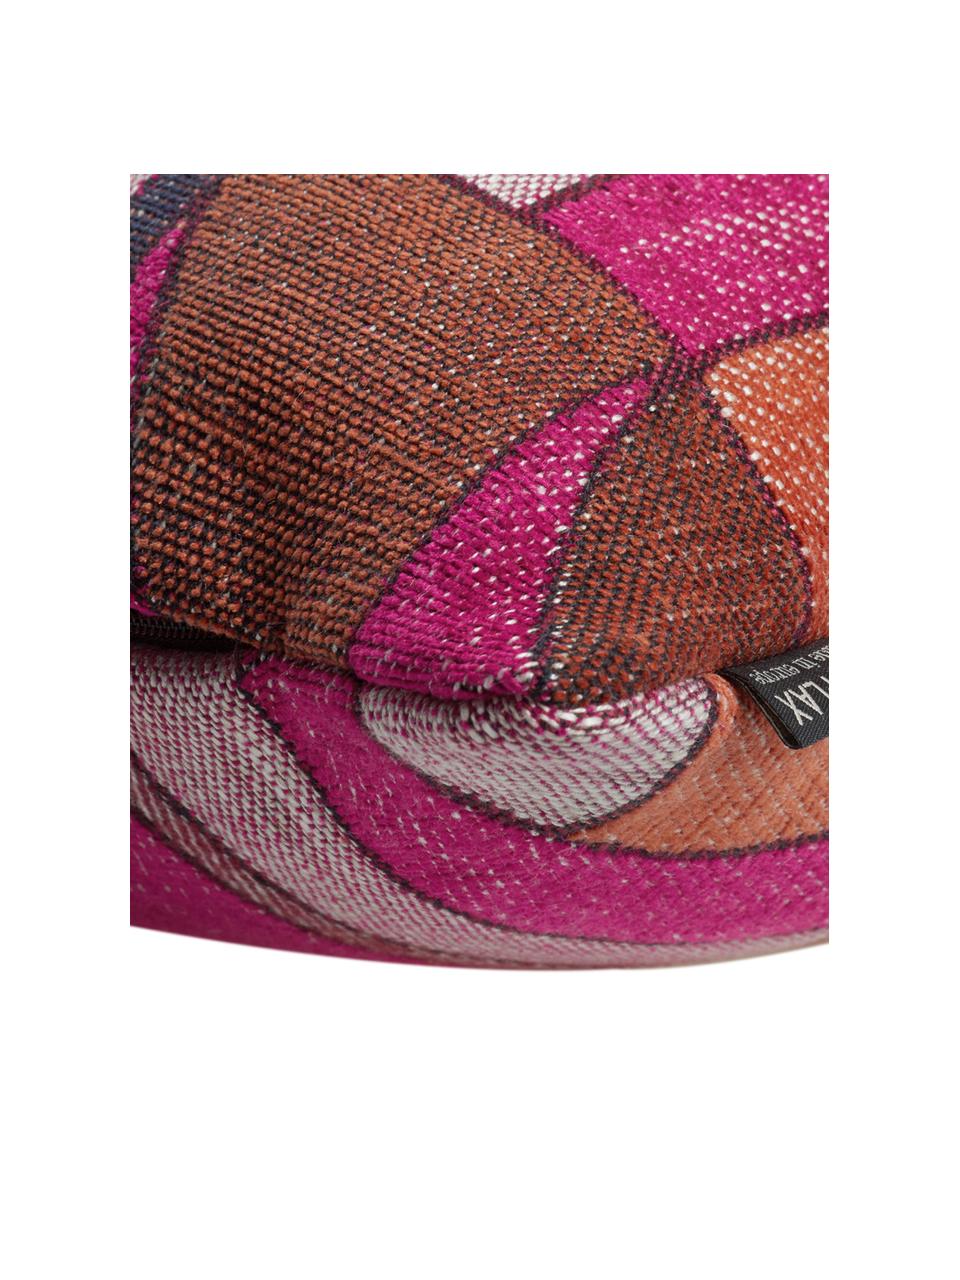 Kissenhülle Morris mit abstraktem Muster, 64% Viskose, 19% Baumwolle, 11% Leinen, 6% Polyester, Rosa, Mehrfarbig, 40 x 40 cm